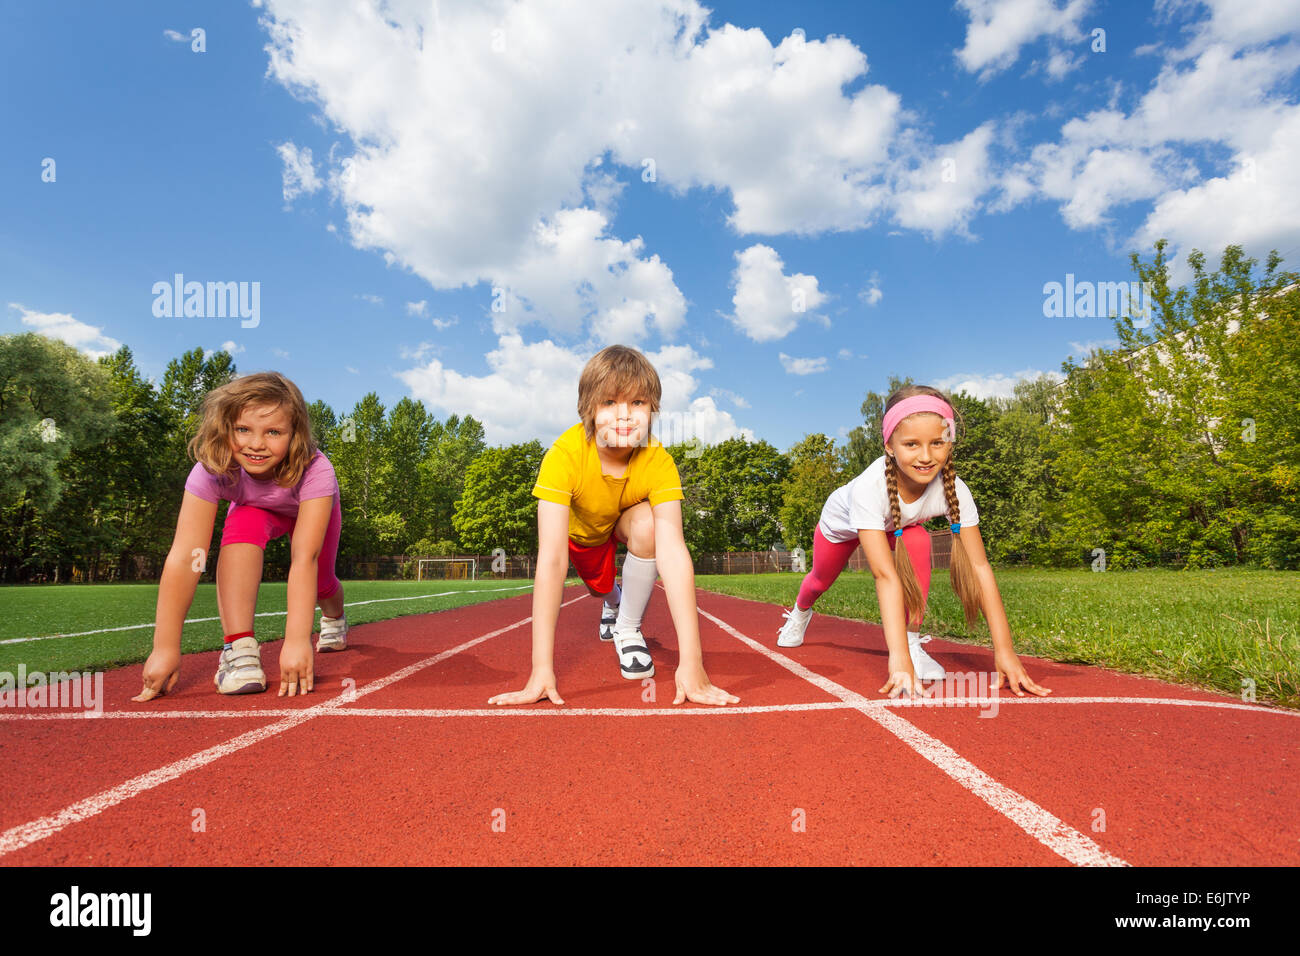 Smiling children on bending knees ready to run Stock Photo